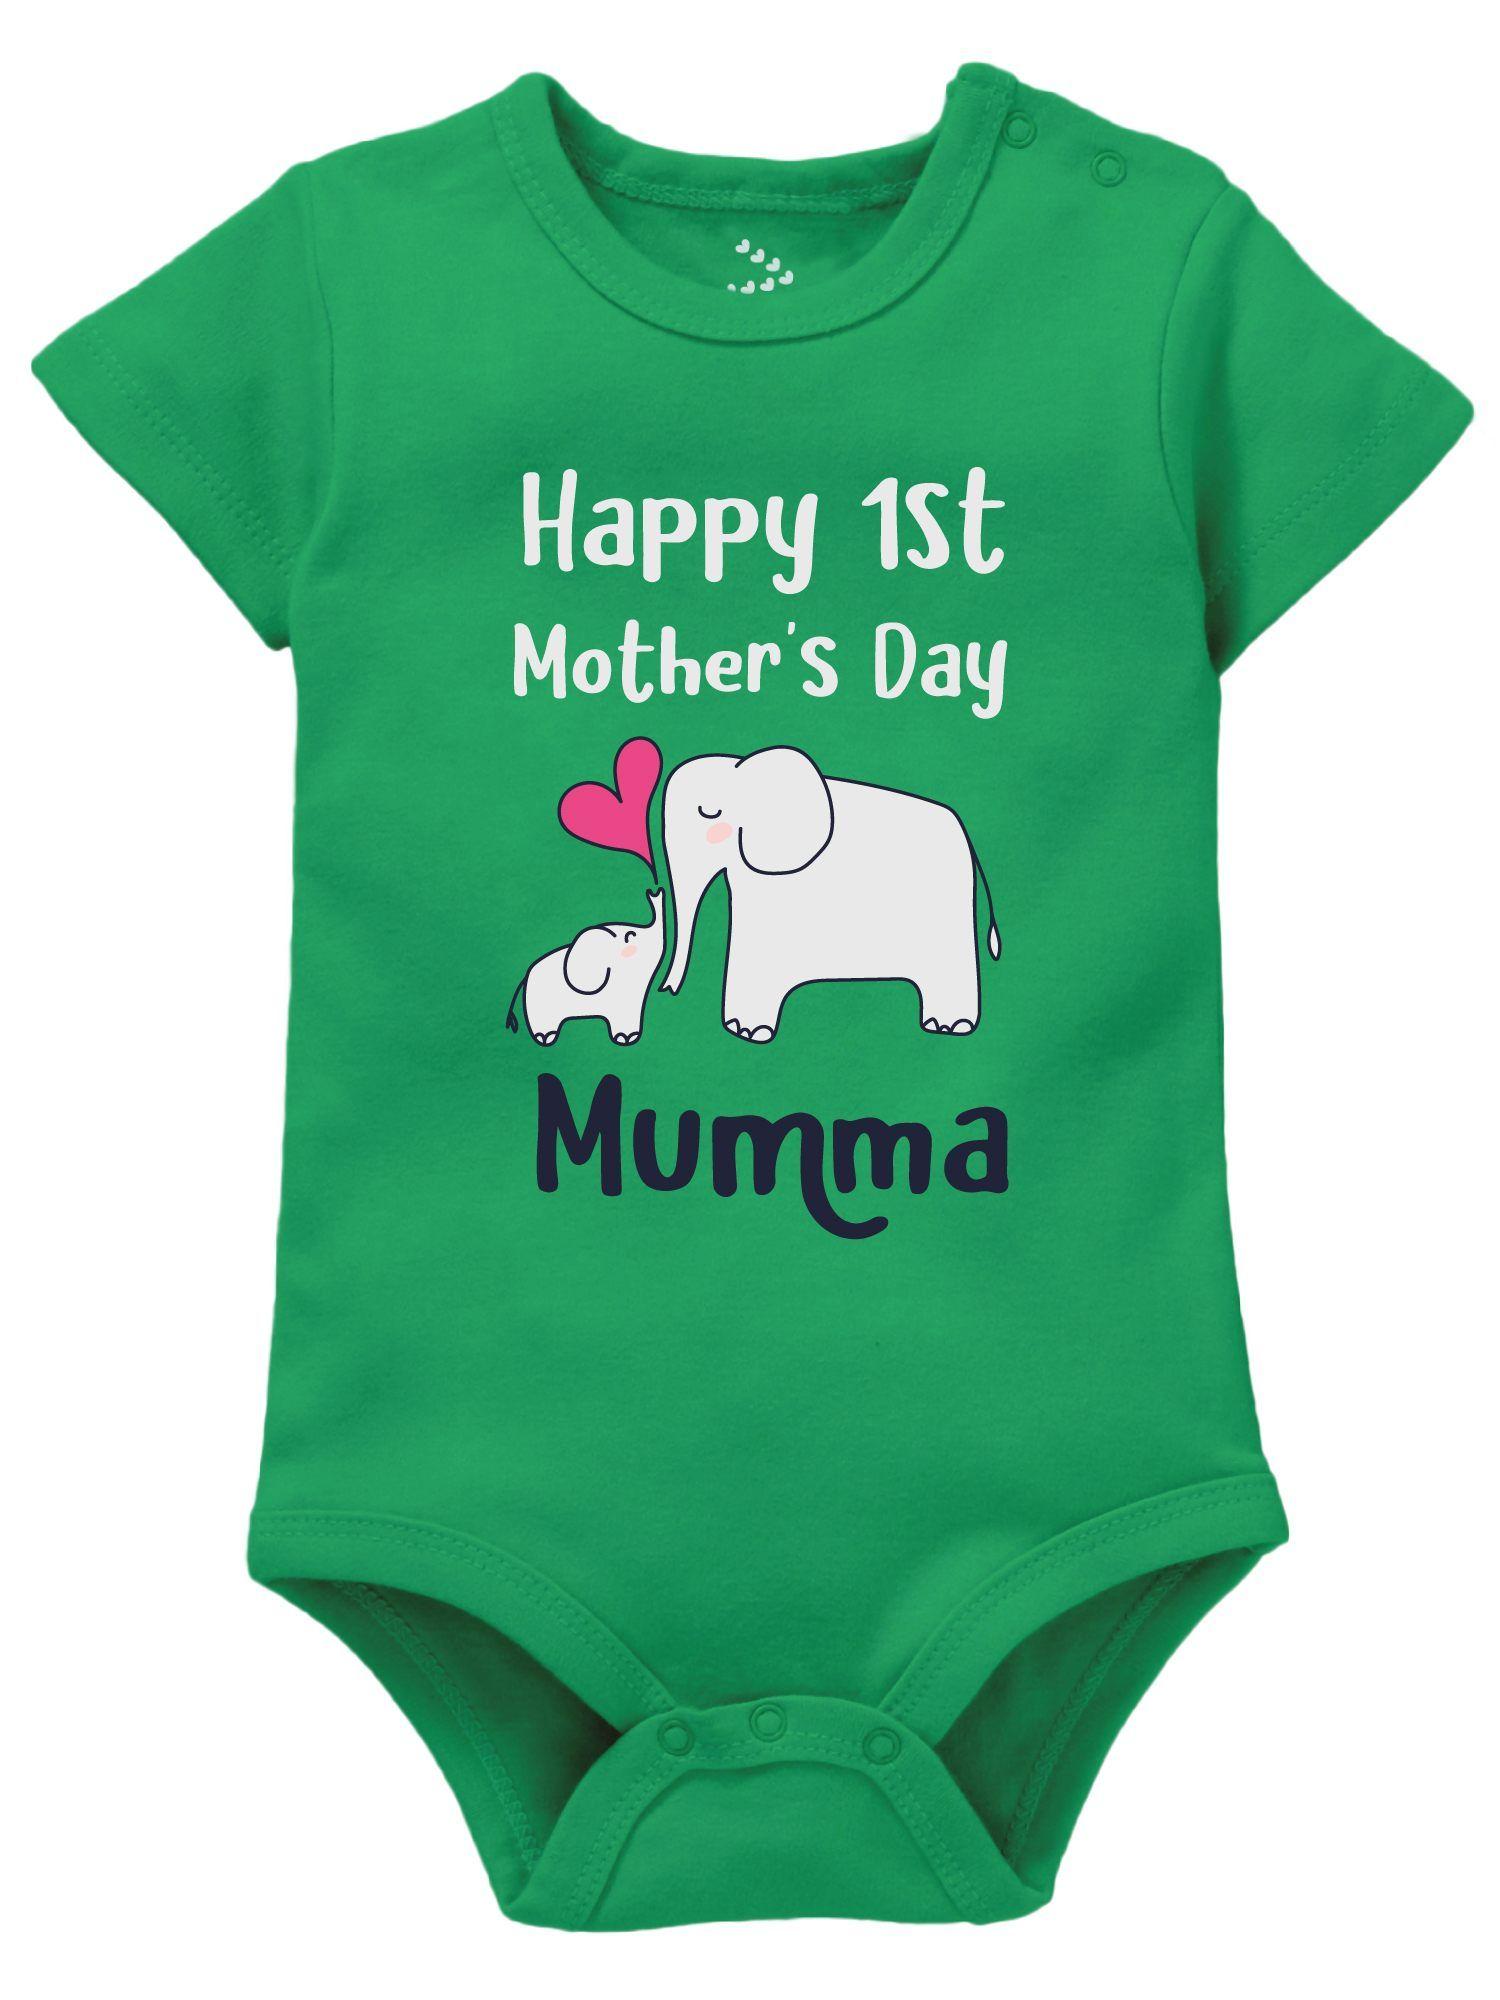 kids-happy-1st-mothers-day-mumma-printed-cotton-bodysuit